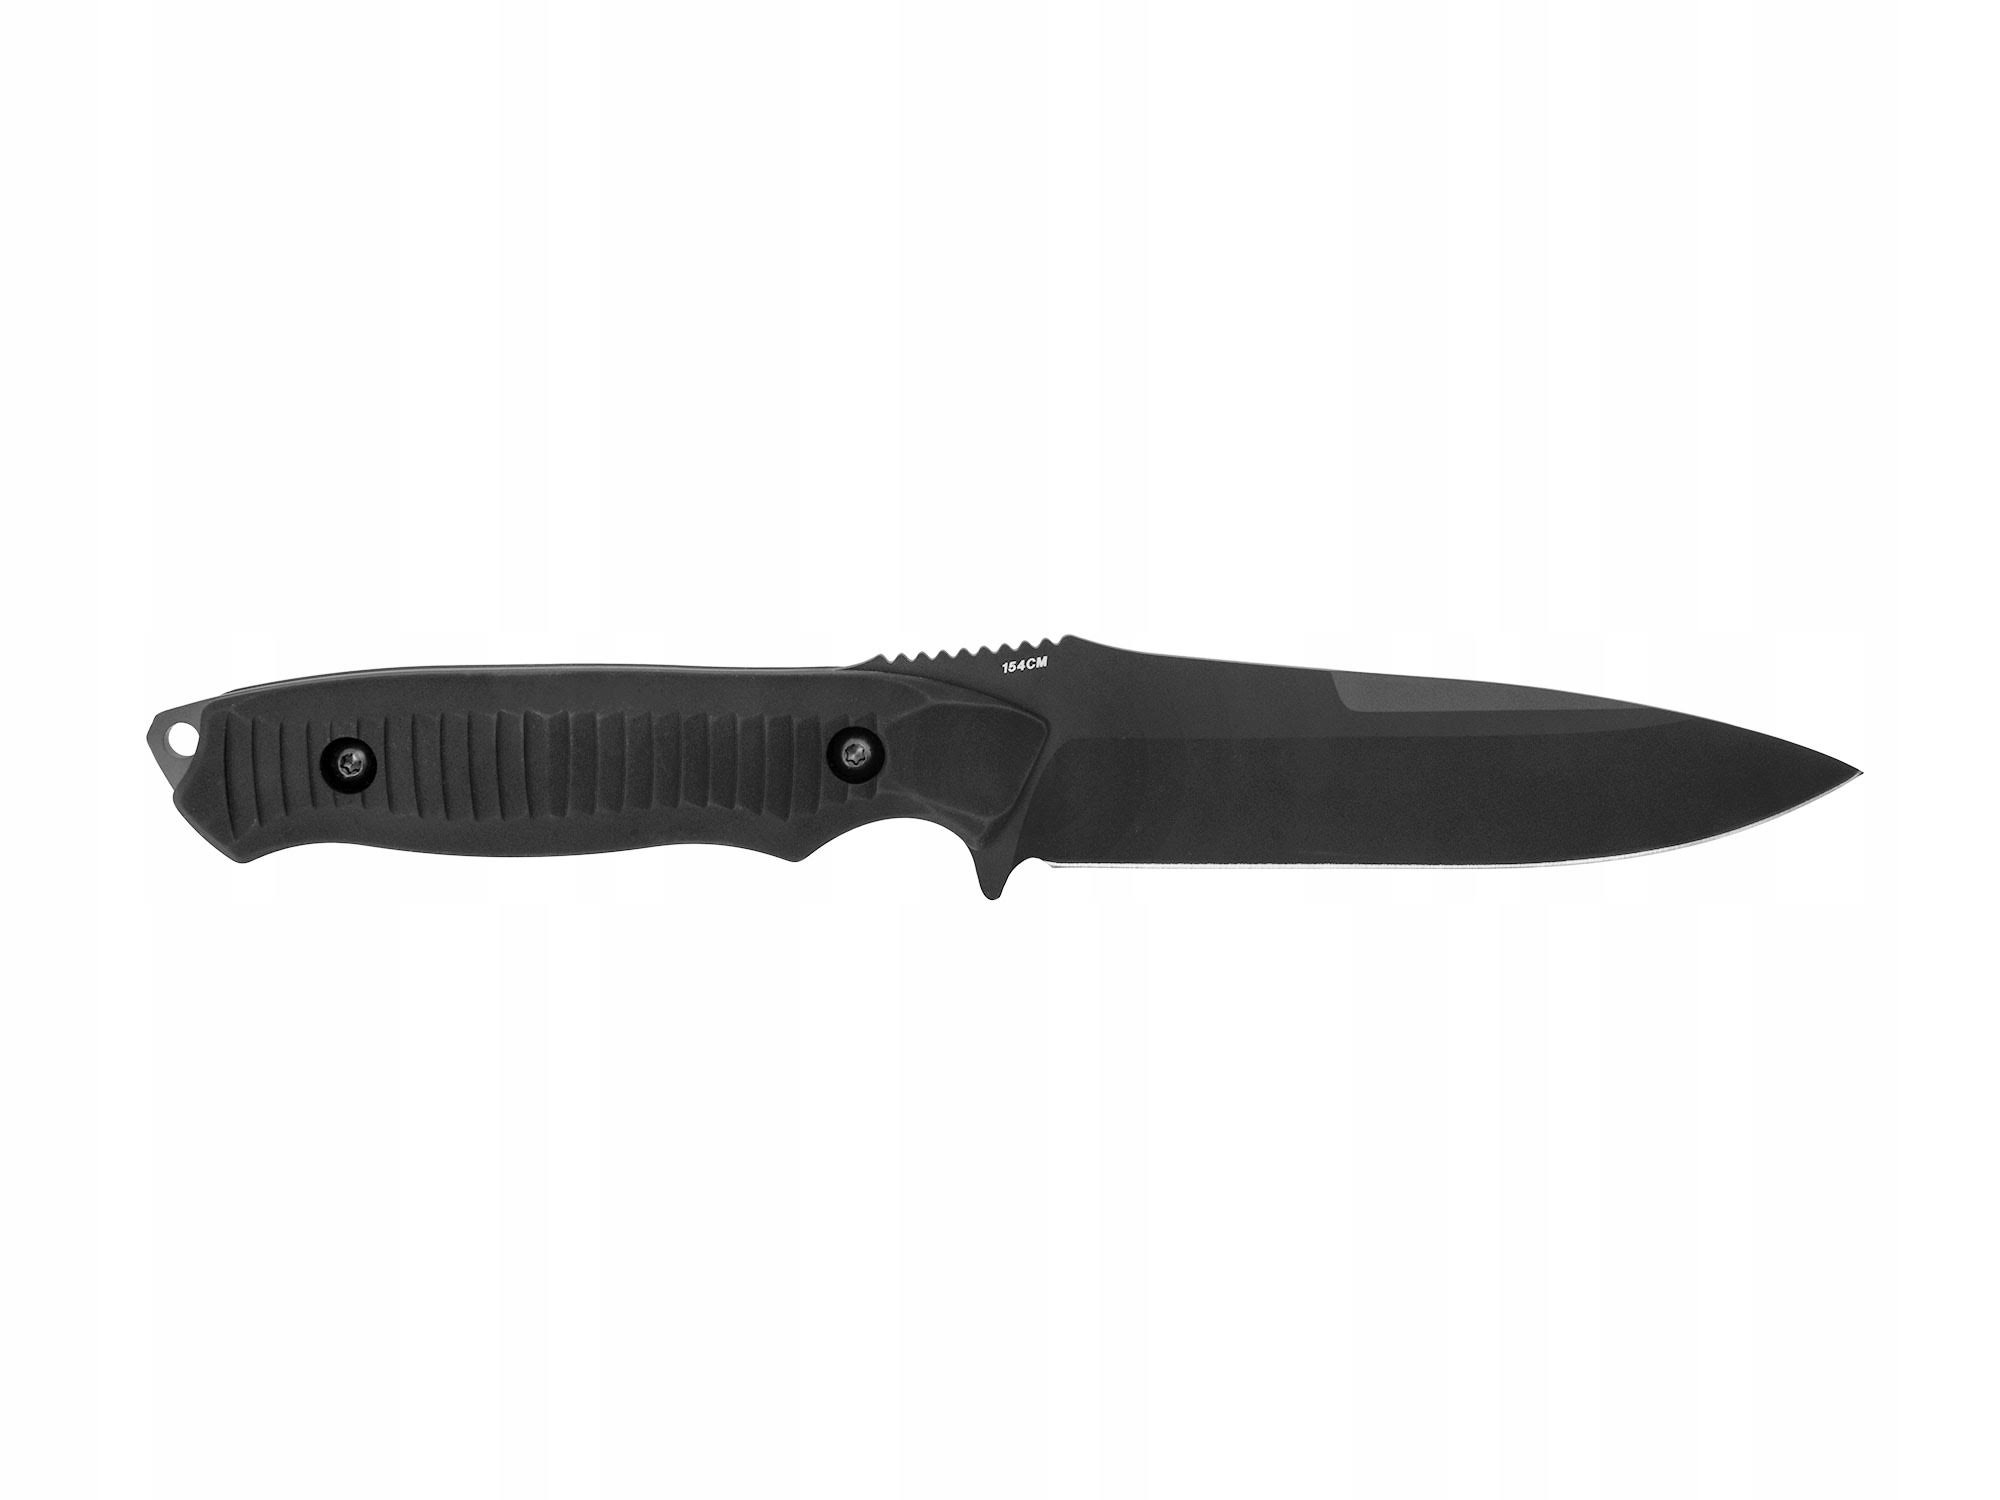 Benchmade Nimravus 140 Knife - Drop-Point, Black Blade, Nylon Sheath